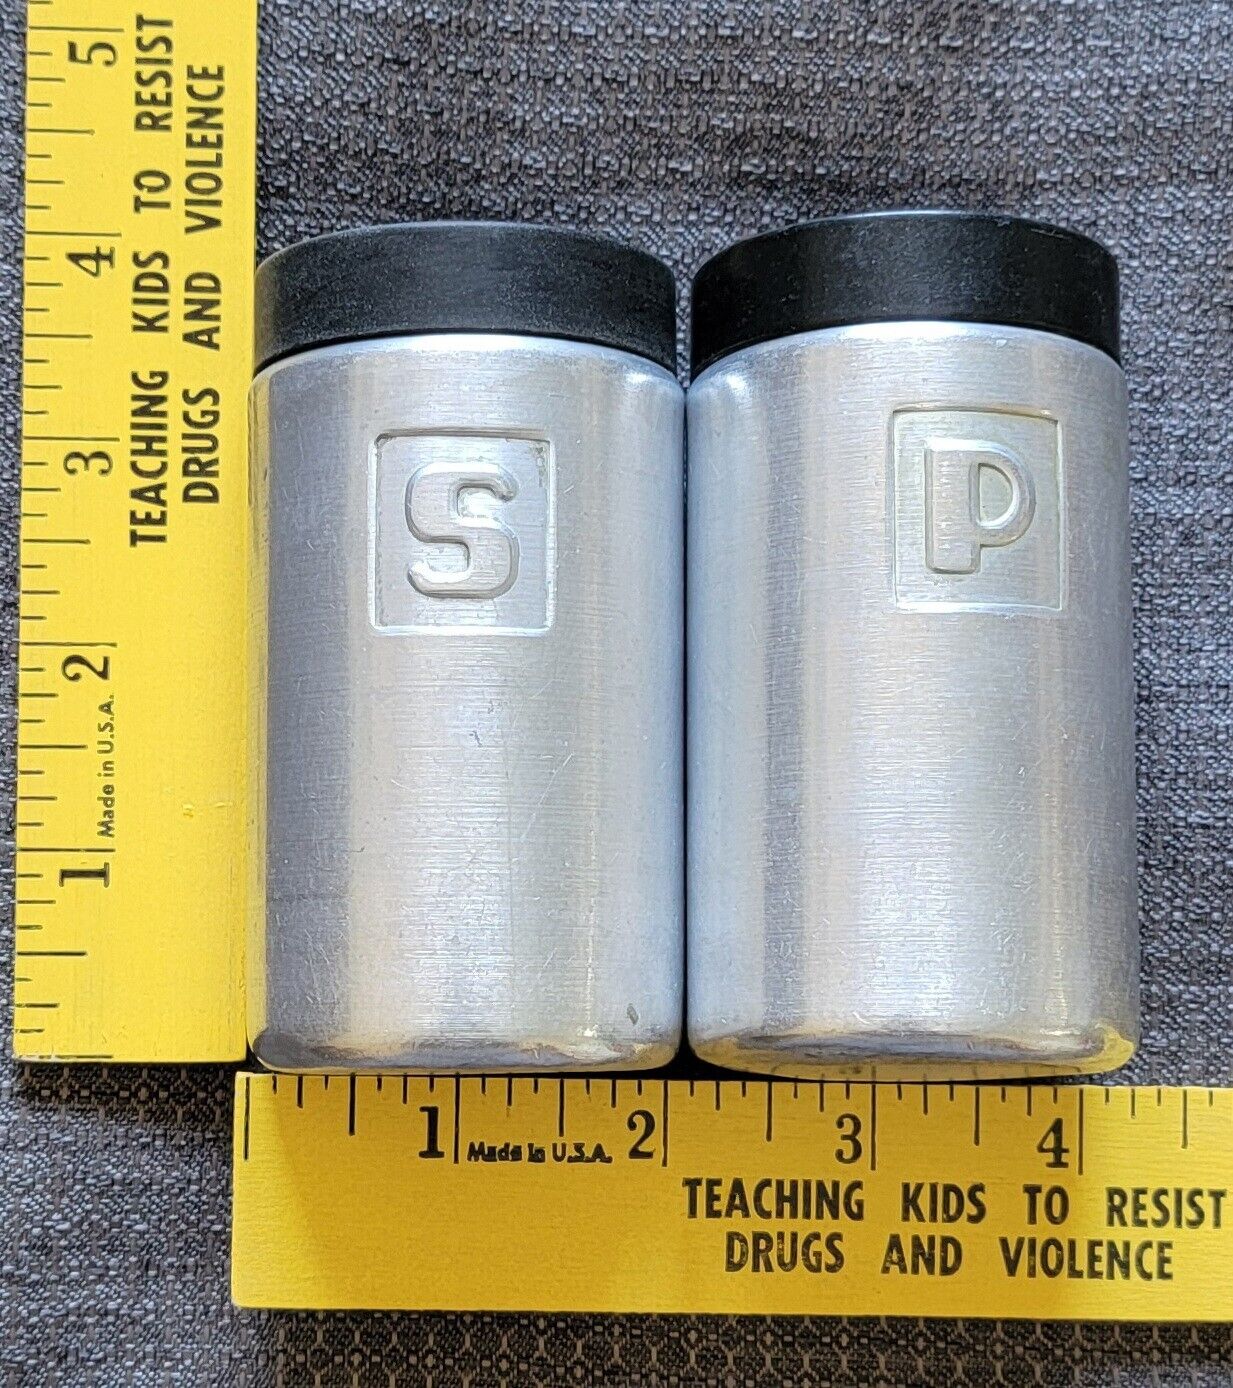 Vintage Aluminum Salt & Pepper Shaker Set